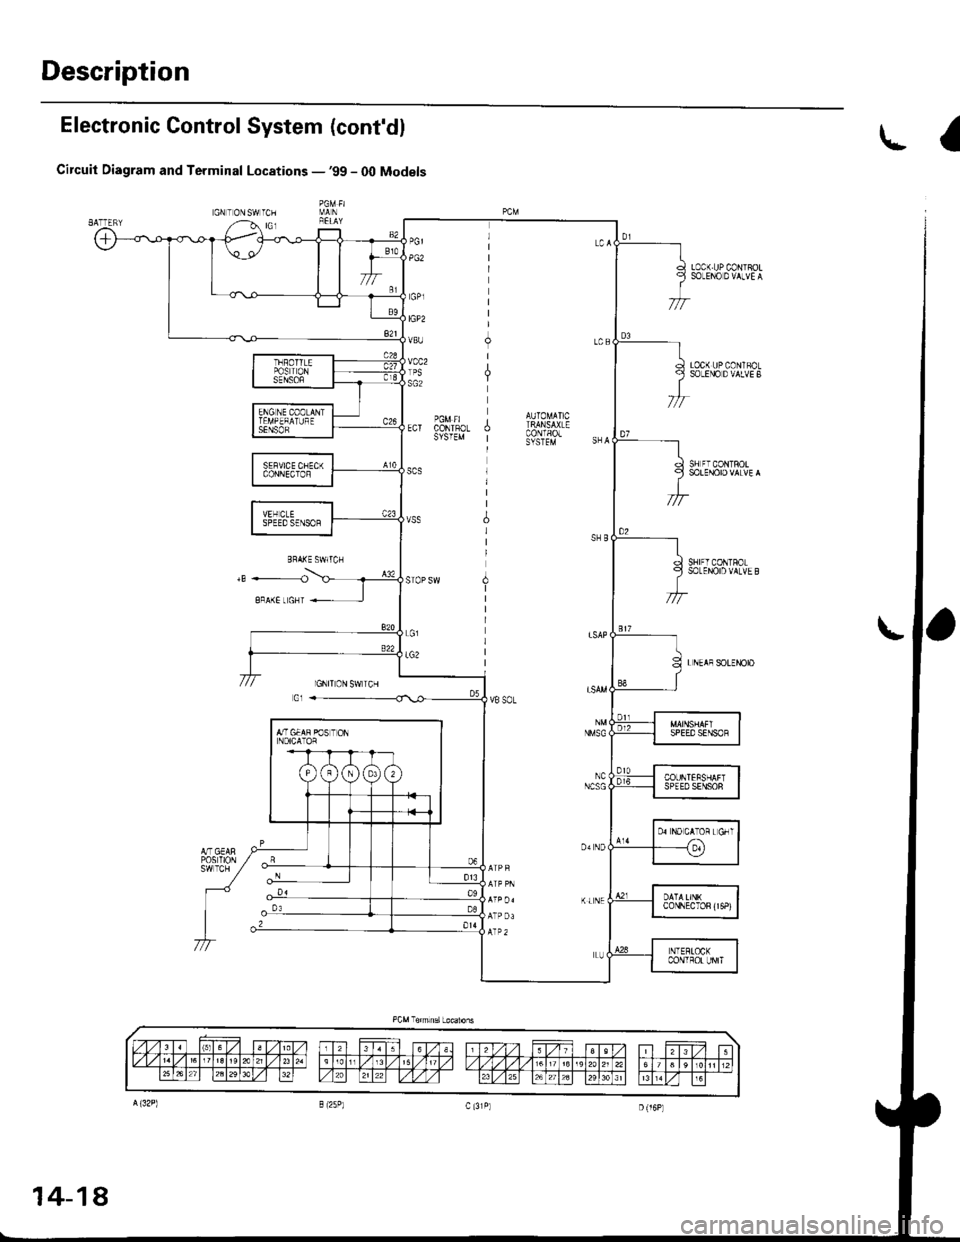 HONDA CIVIC 1997 6.G Workshop Manual Description
Electronic Control System (contdl
Circuit Diagram and Terminal Locations -99 - O0 Models
GNTONSWICH,,--b. rcj
LI
LOCK.UPCONIFOLSOLEI\Q D VALVE A
LOCK UP CONIROLSOLENODVALVEB
SH FI CONTR